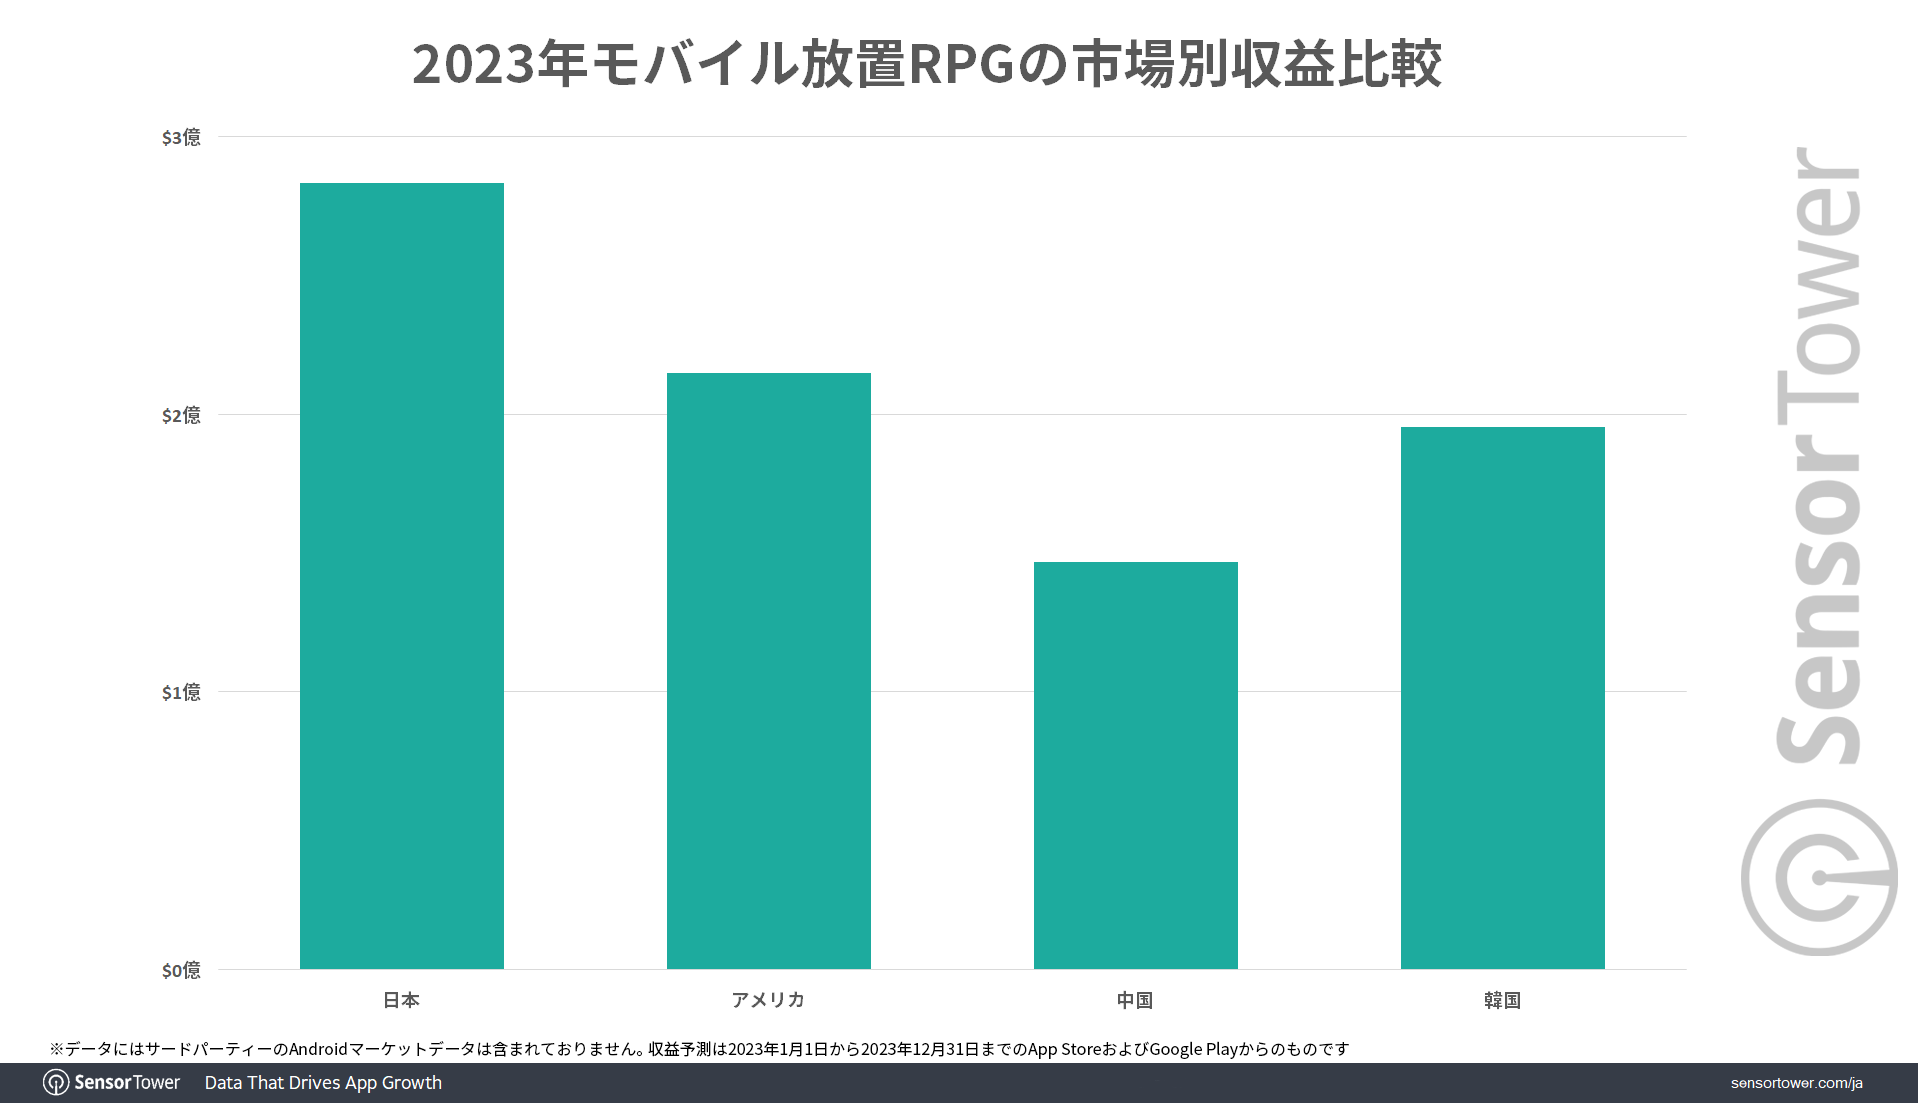 SensorTower调查显示日本为放置RPG手游最畅销市场总营收高达2.8亿美金